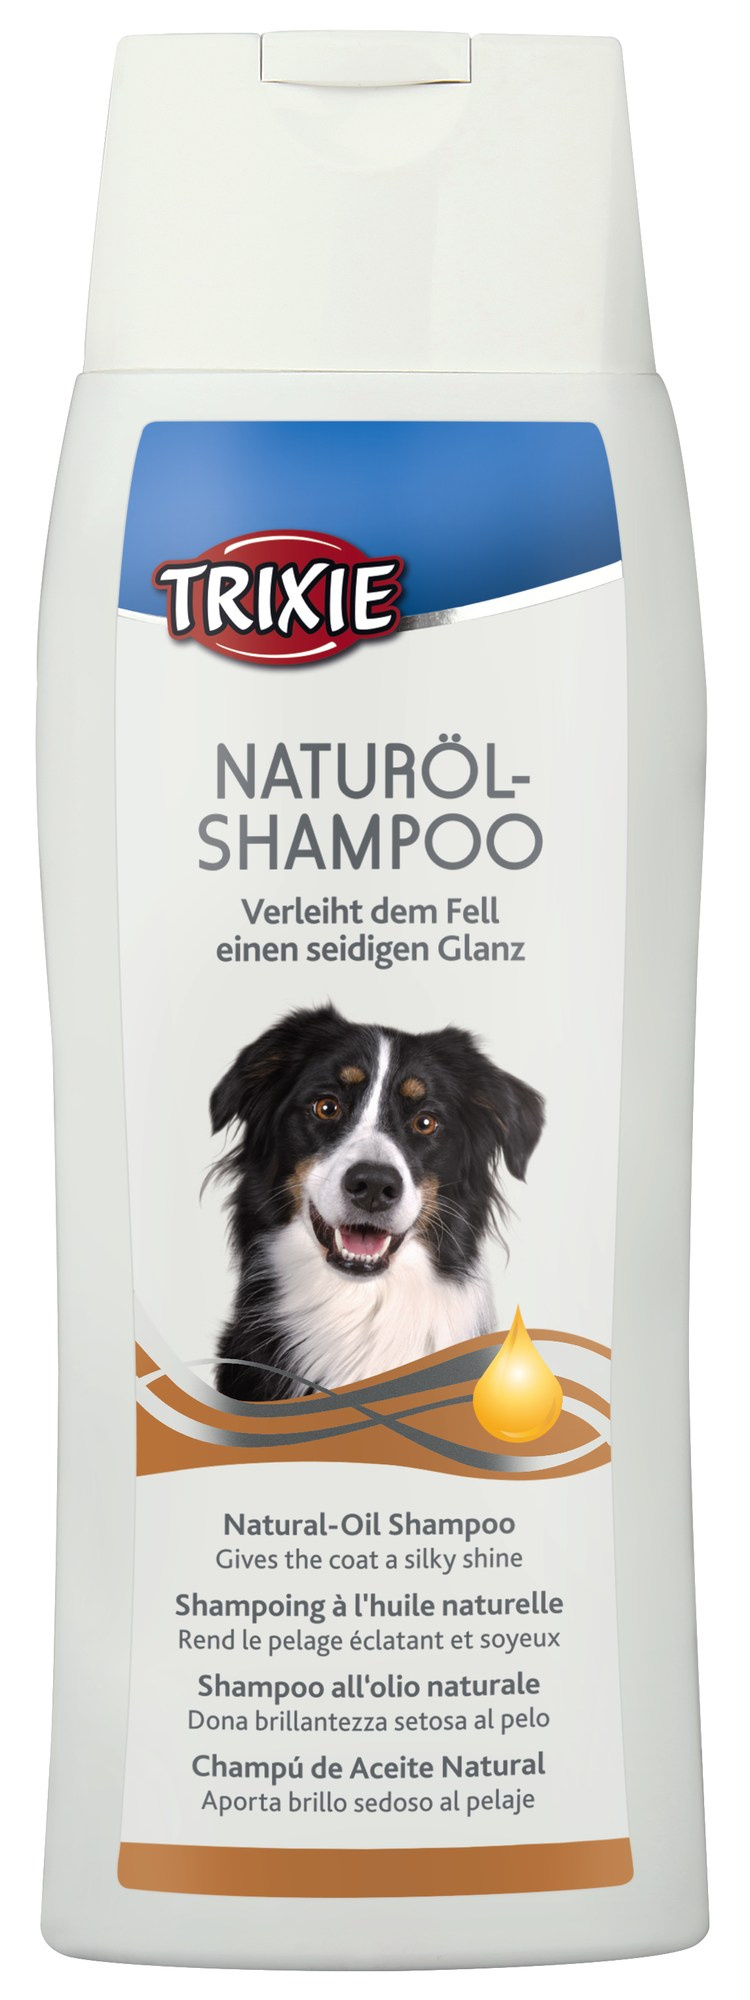 Naturalöl-Shampoo